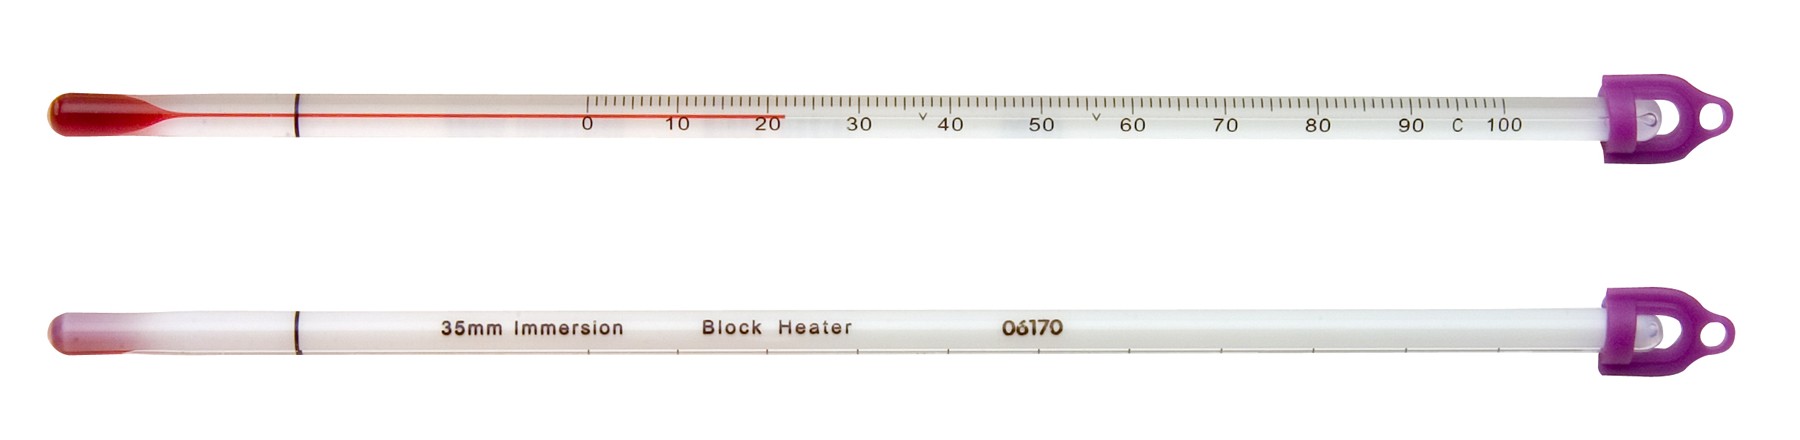 H-B DURAC Plus Incubator Verification Thermometer, 10 to 45C